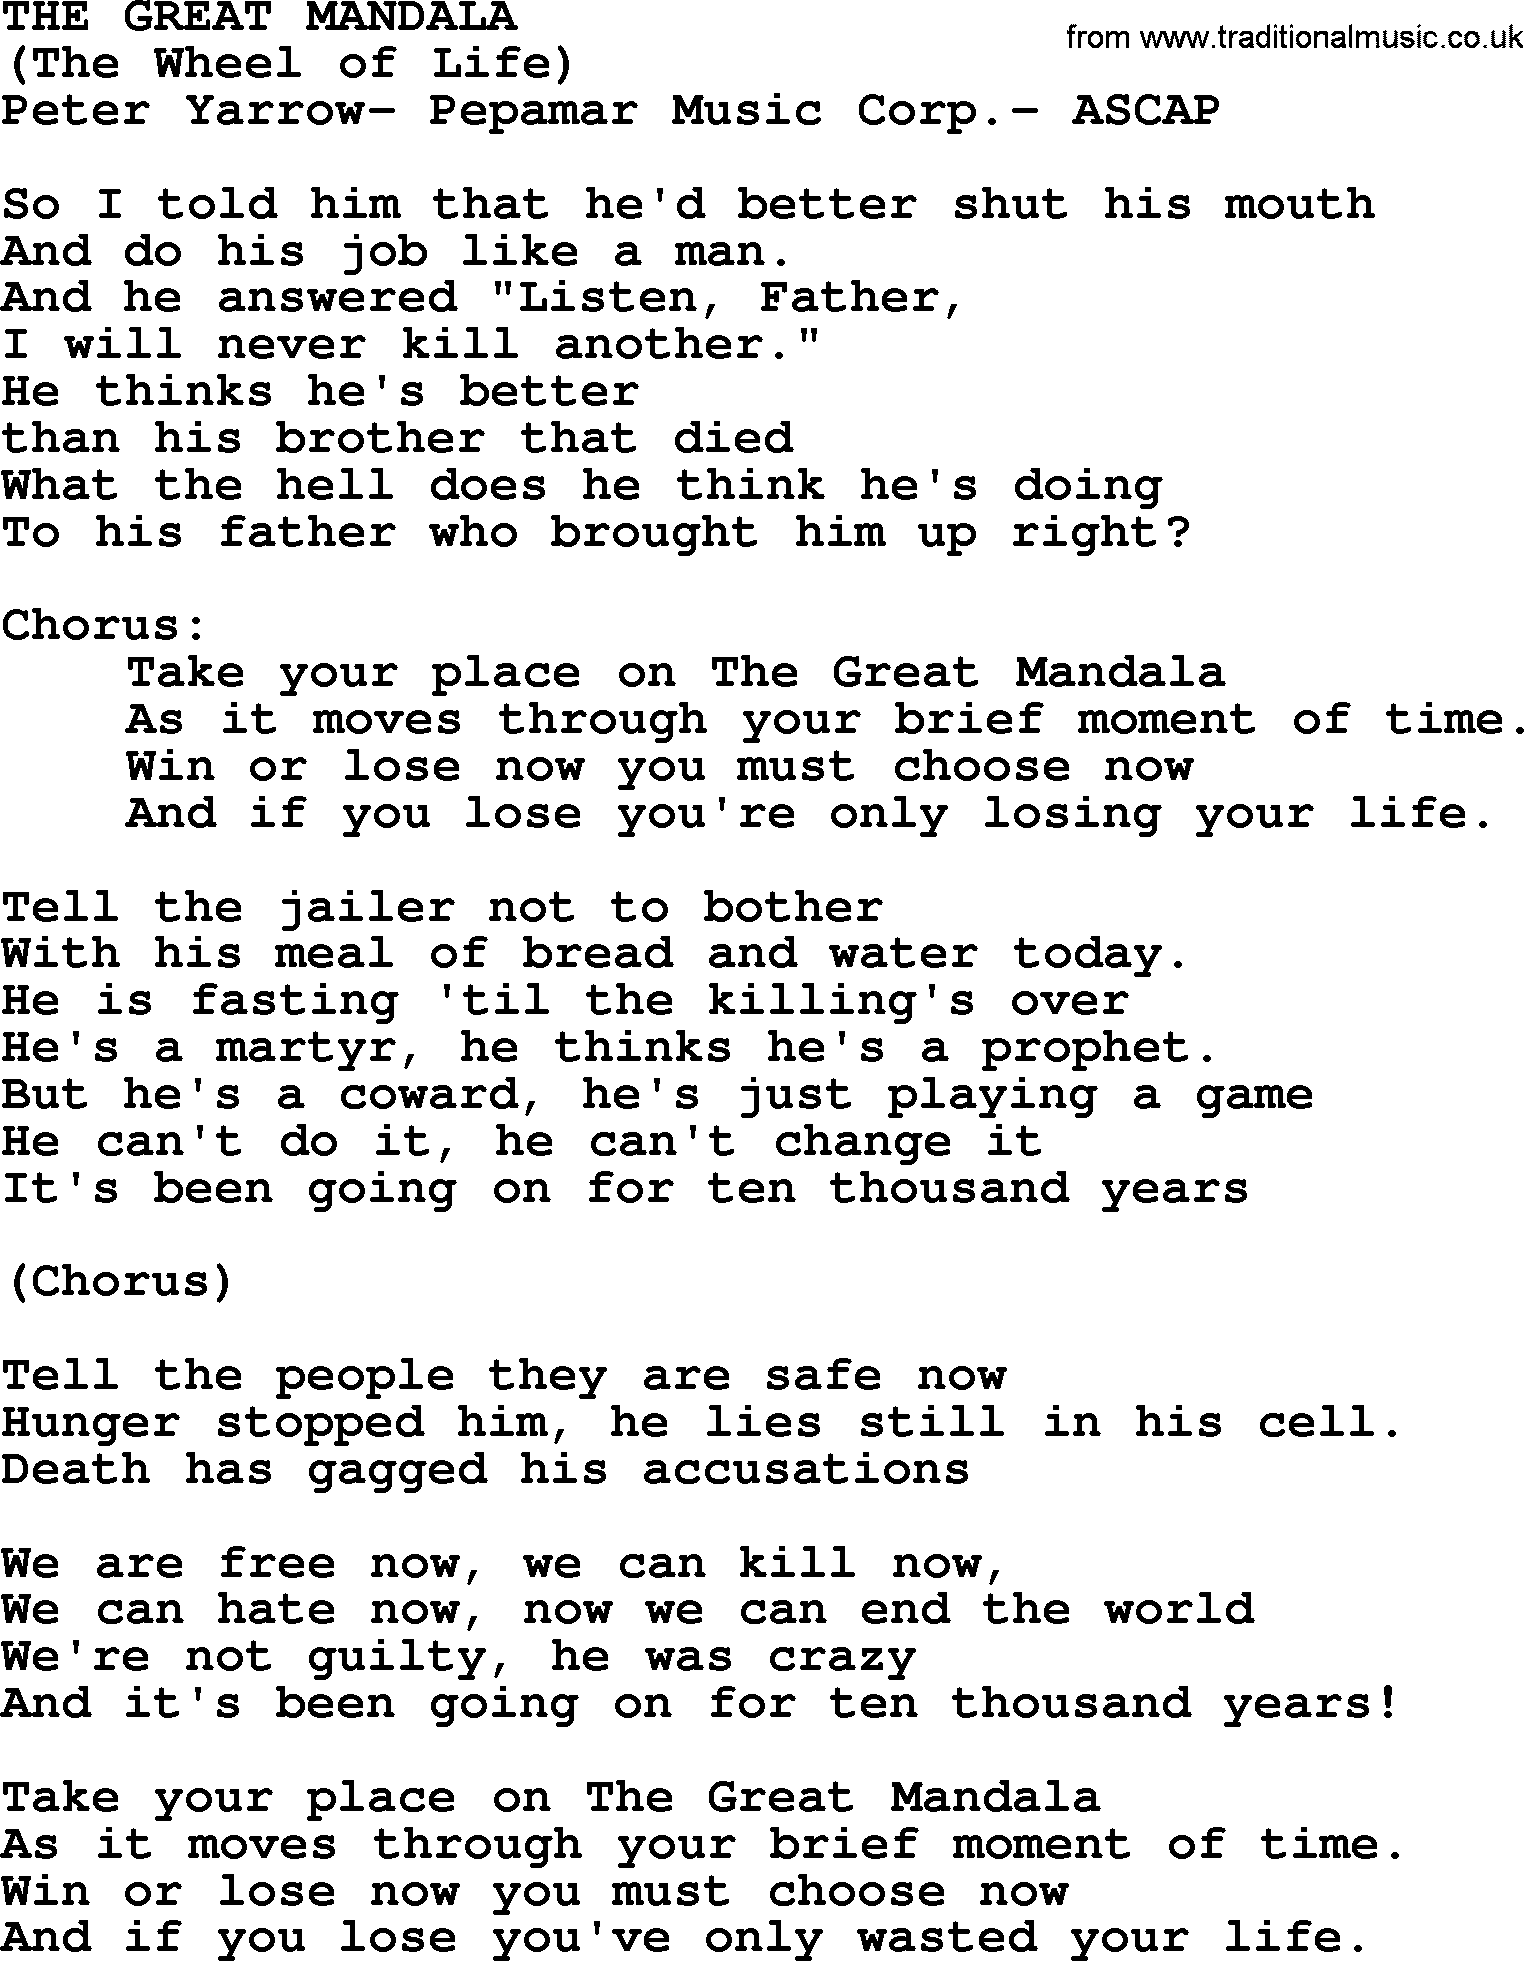 Peter, Paul and Mary song The Great Mandala lyrics